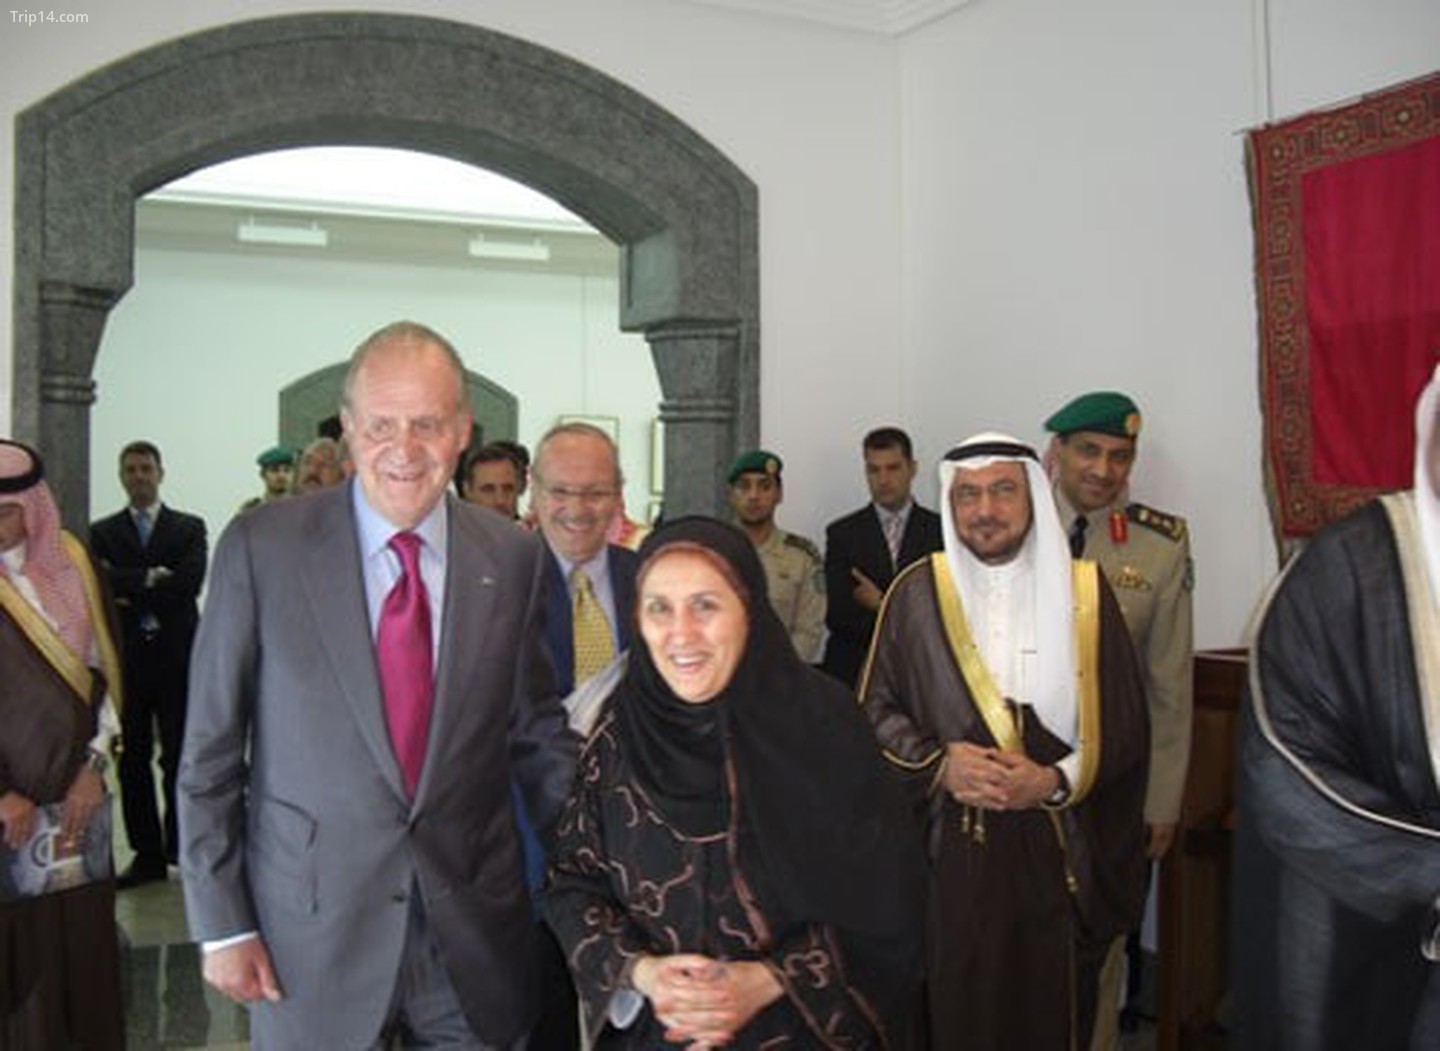  Vua Juan Carlos của Tây Ban Nha tham dự triển lãm của Safia Binzagr năm 2008   |   